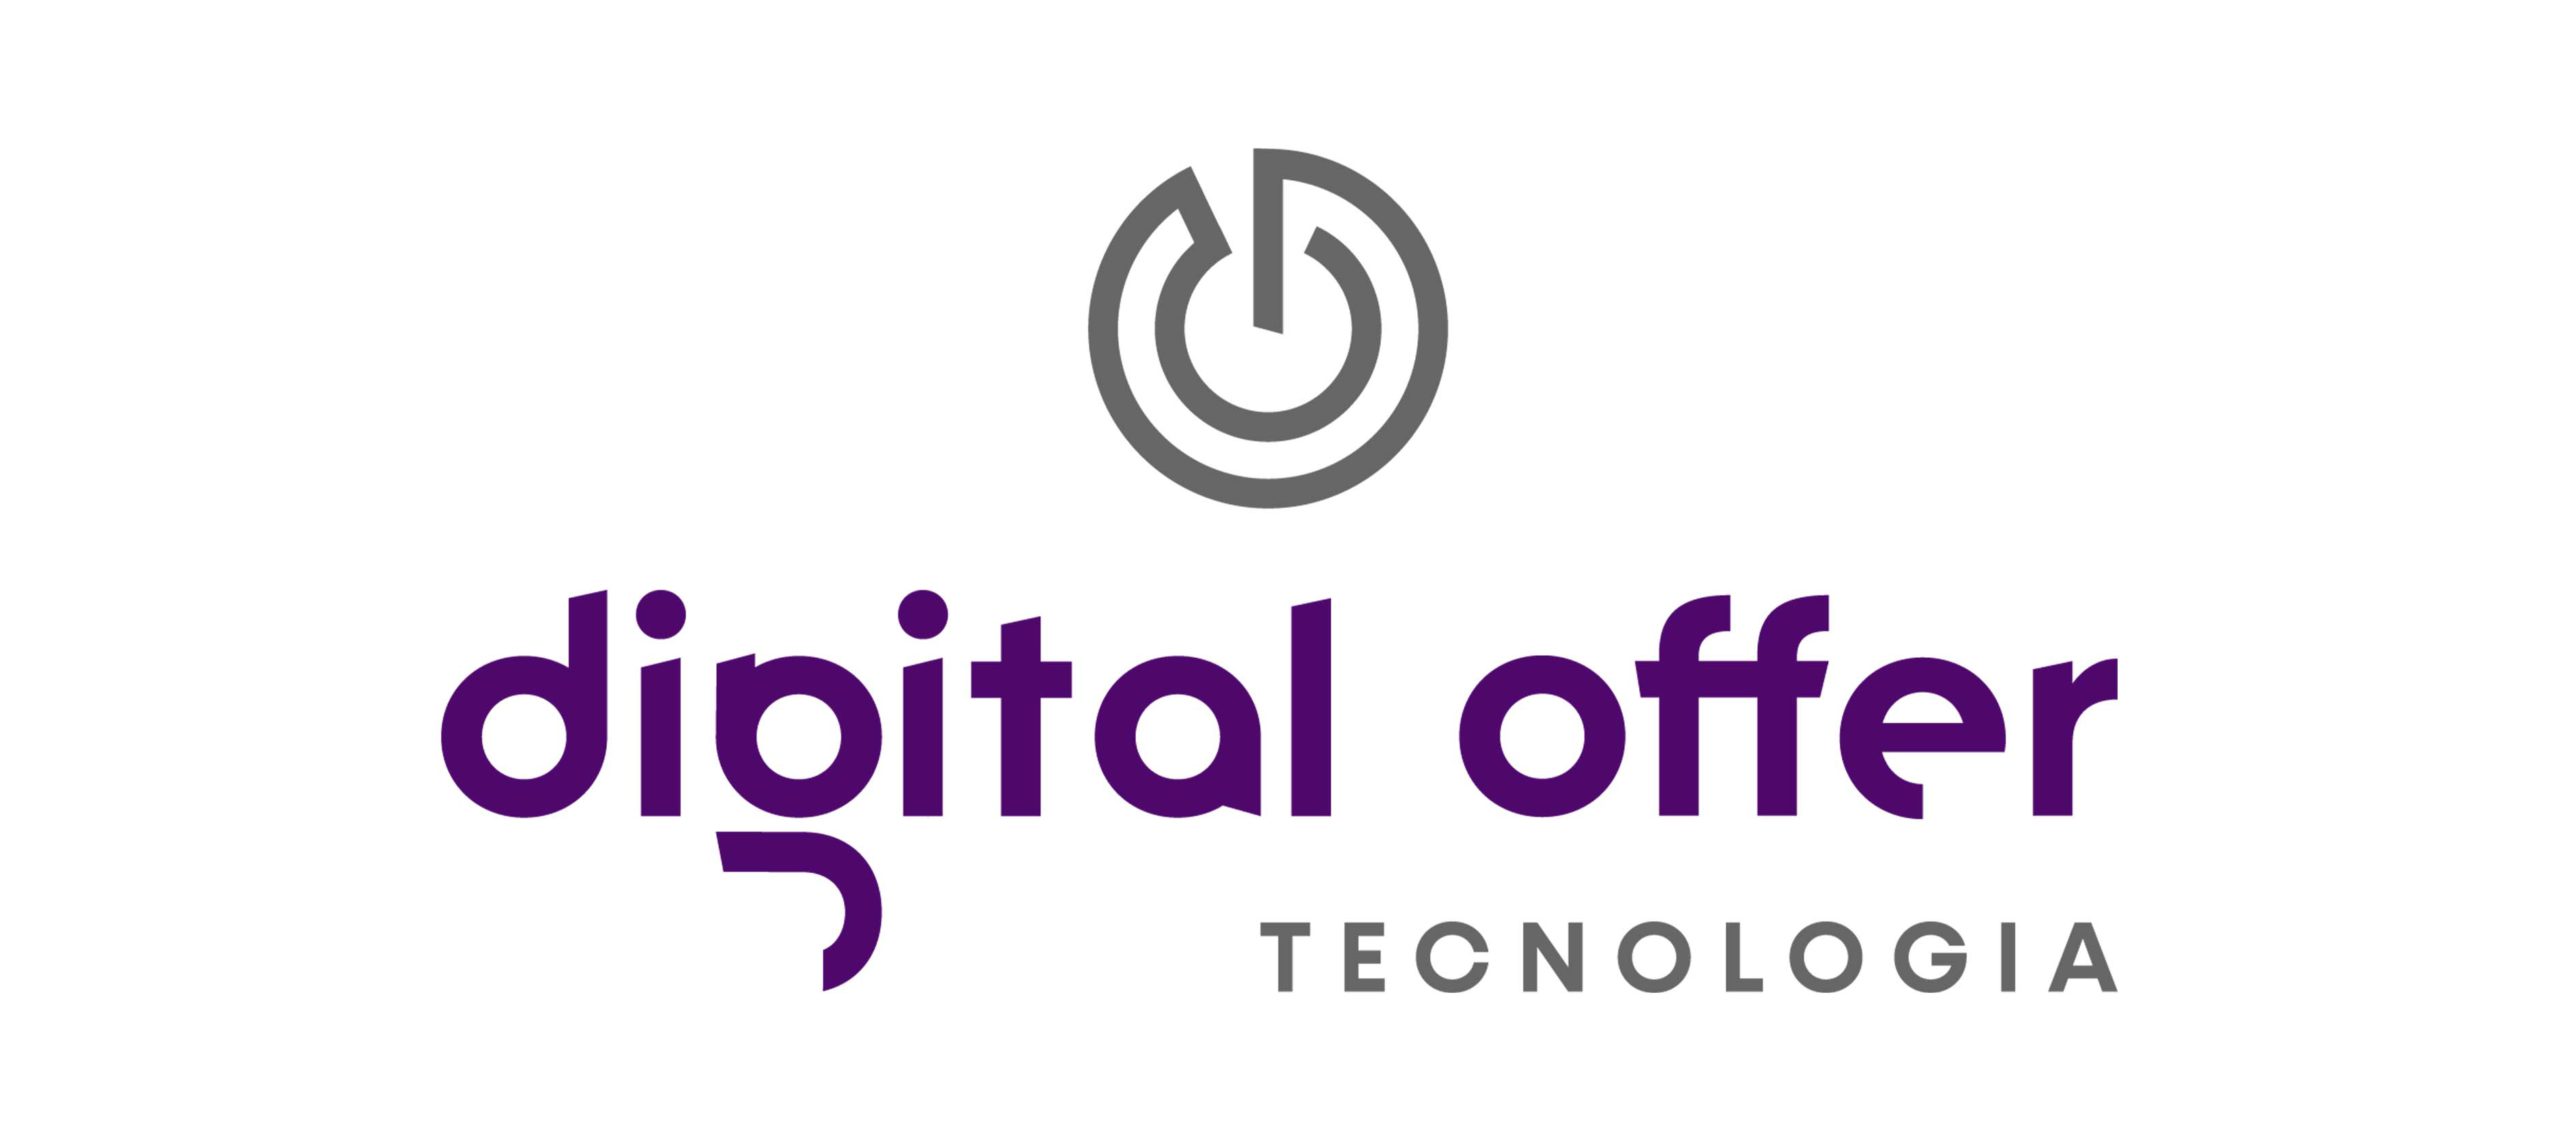 digital offer